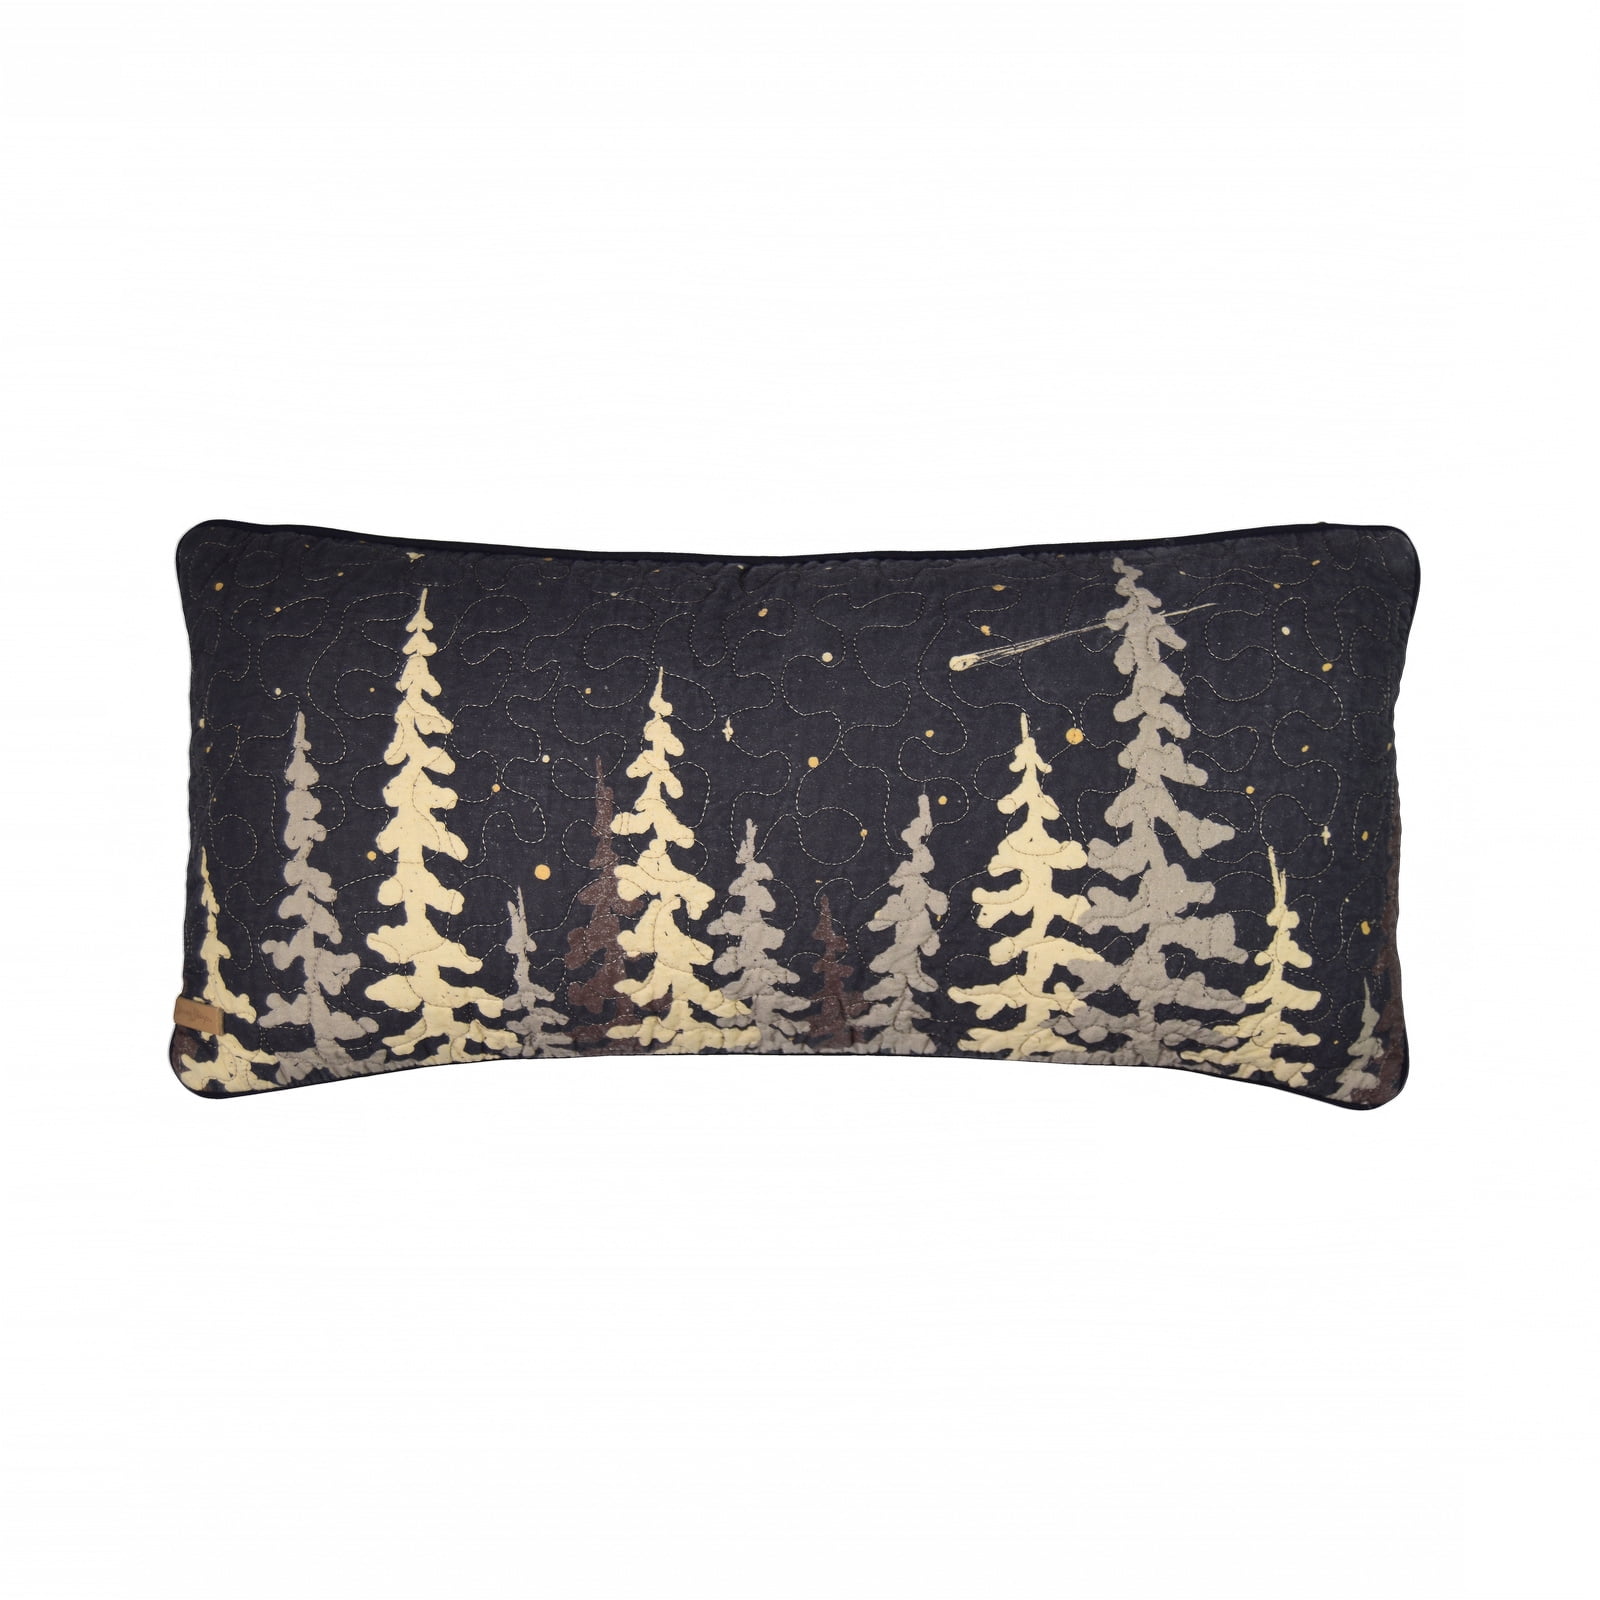 61217 11 X 22 In. Moonlit Cabin Rectangle Decorative Pillow, Multi Color